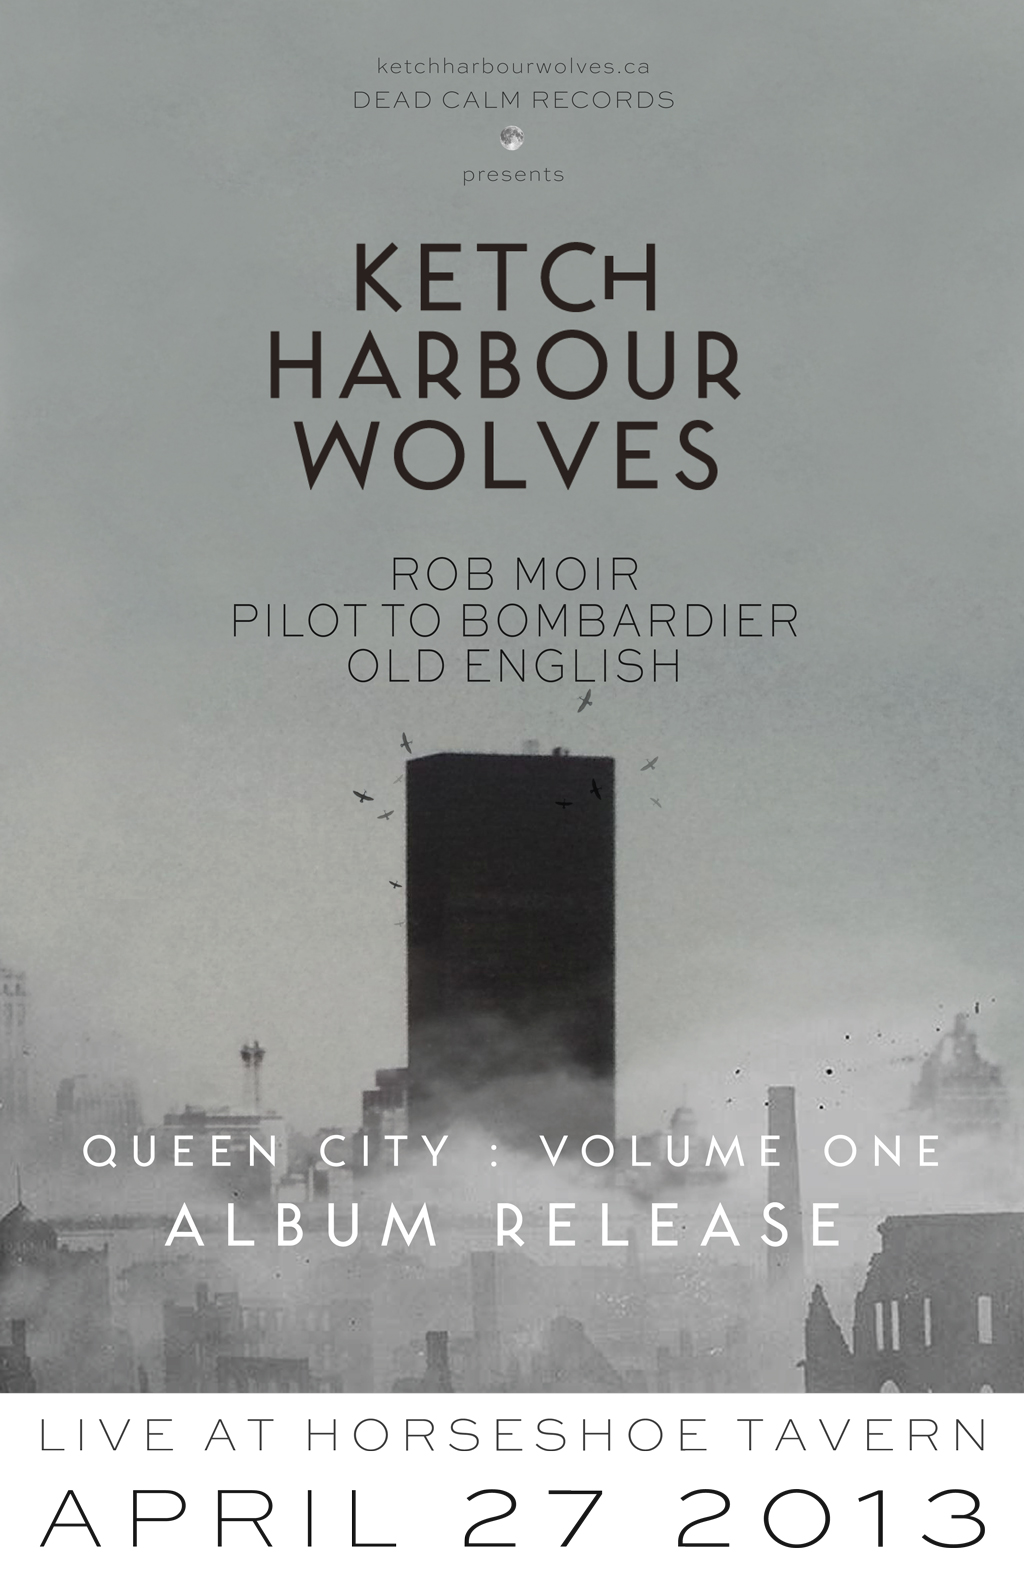 ketch-harbour-wolves-2013-04-27-horseshoe-tavern-toronto-album-release-queen-city-volume-one